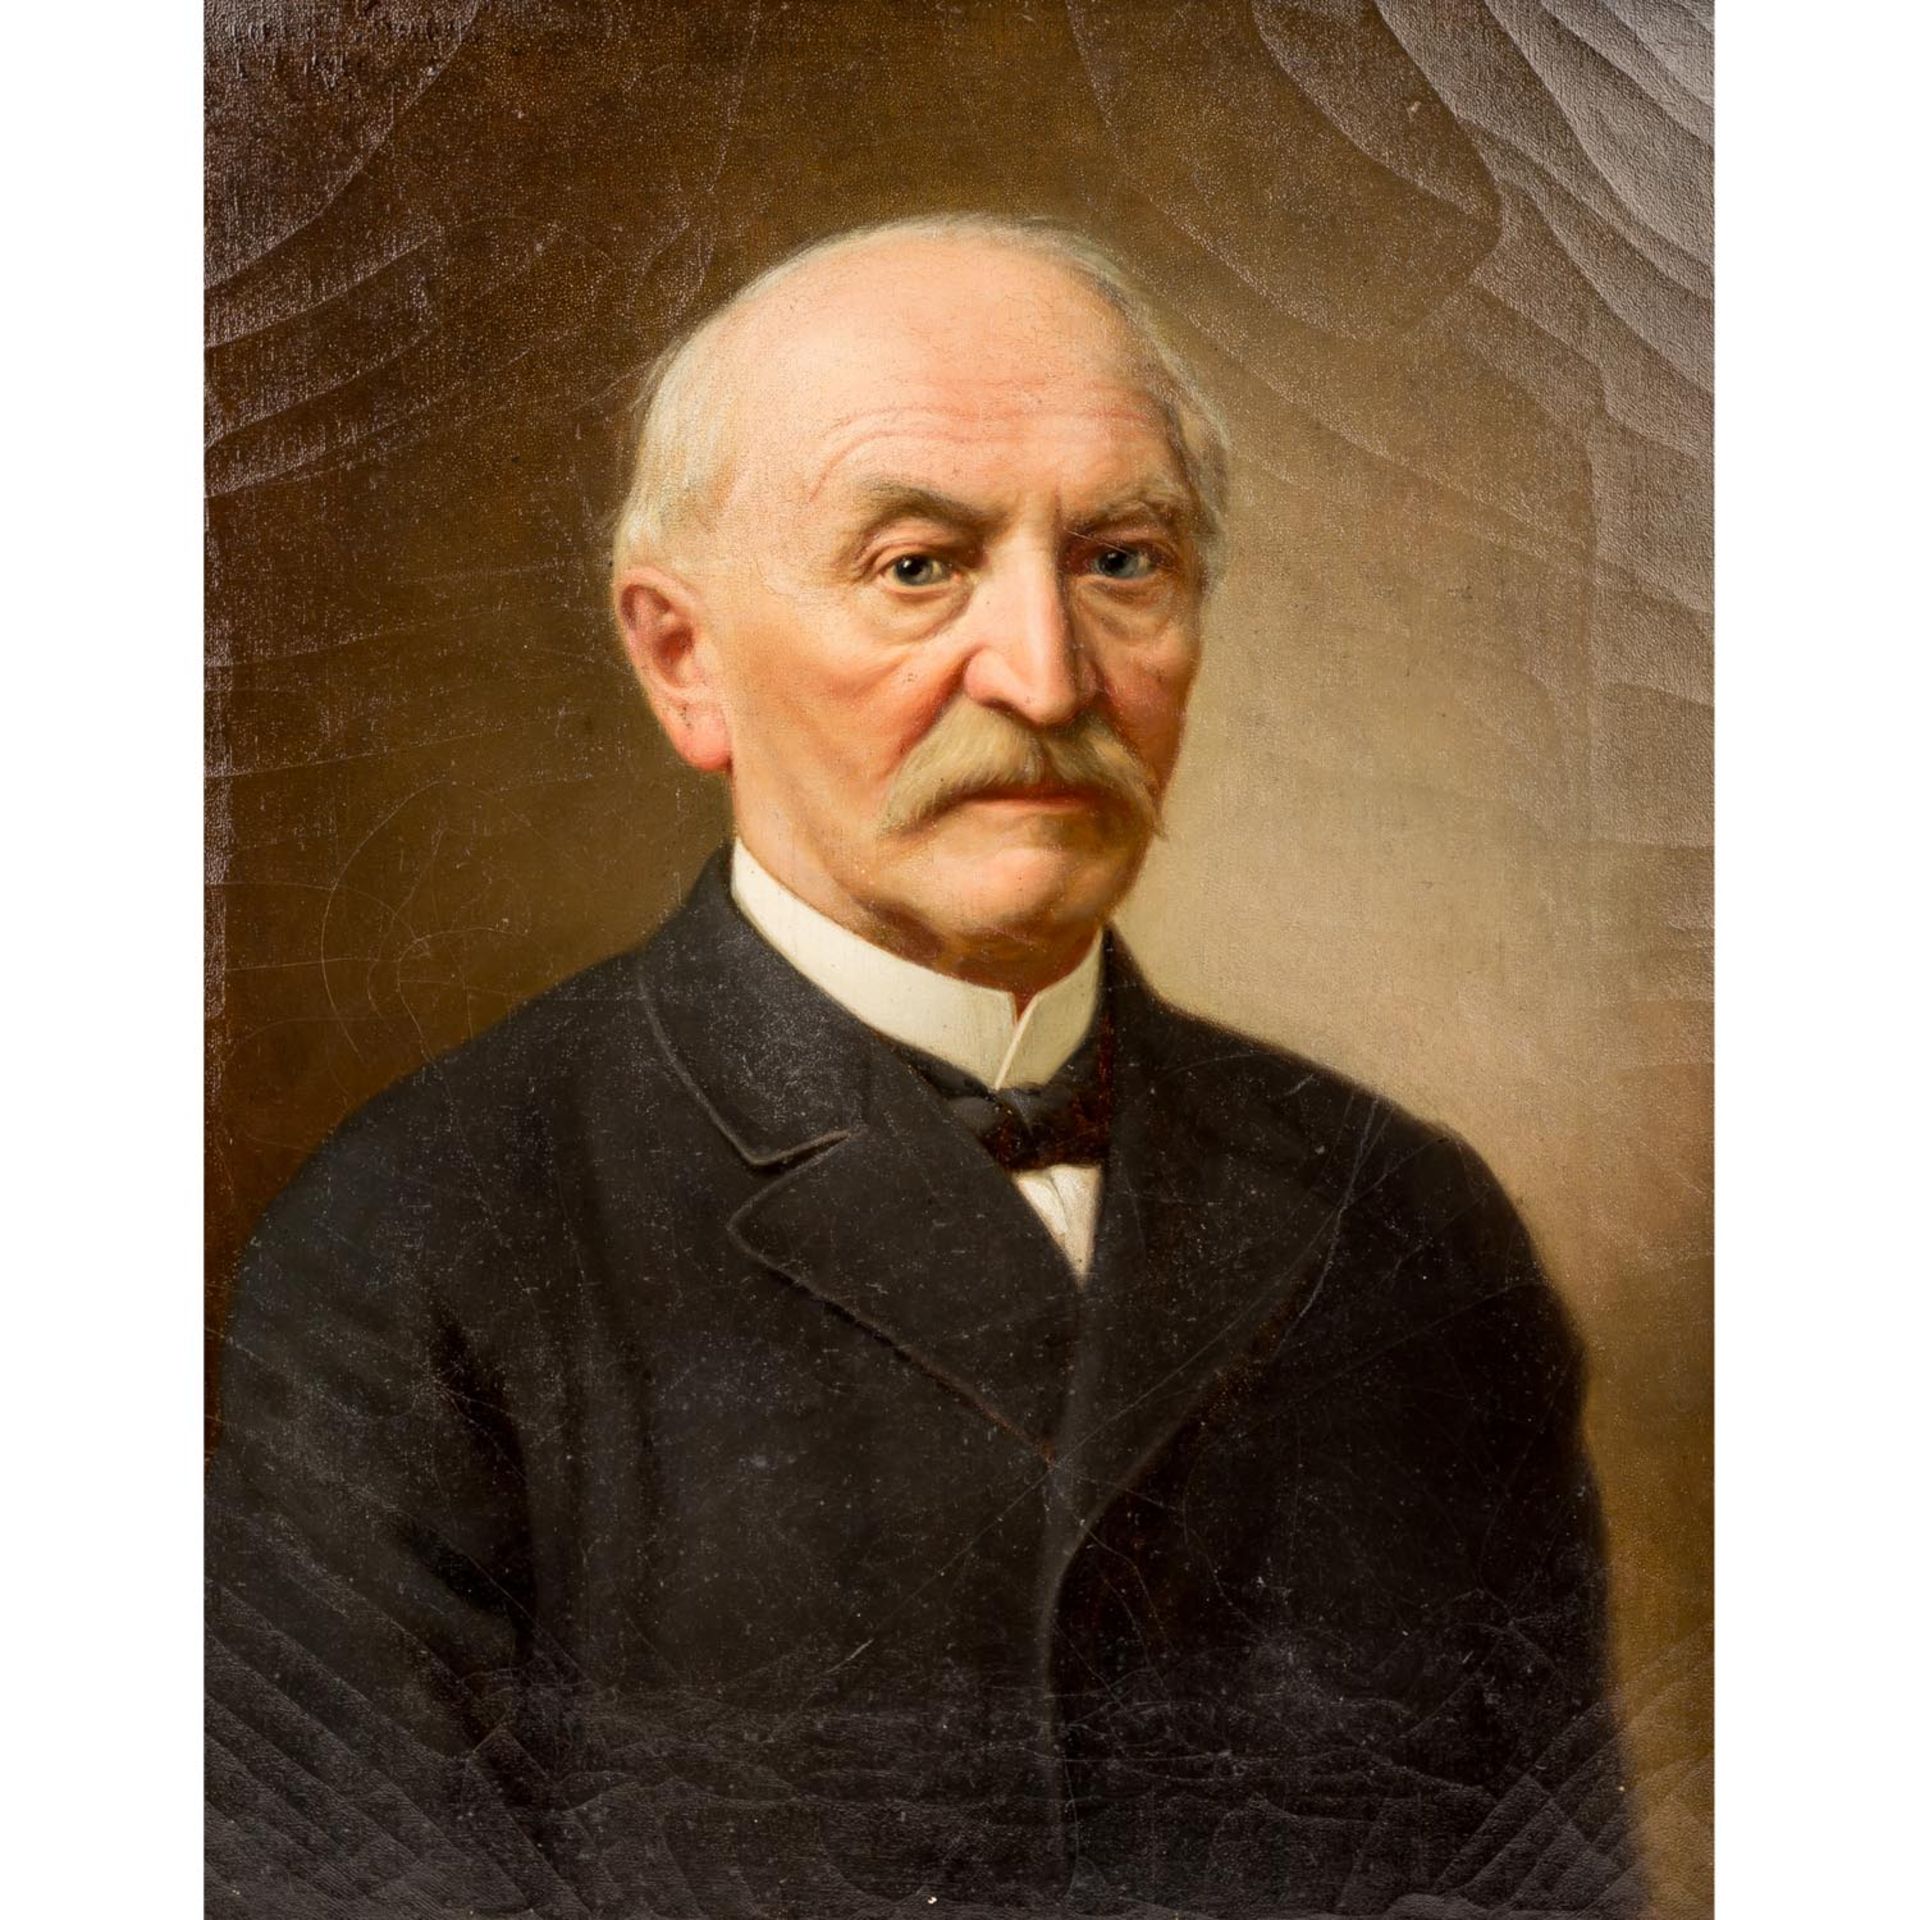 PORTRÄTIST DES 19.JH. "Georg Friedrich Egelhaaf" Öl/Lwd., sig. und dat.: "gem. o.l. Berger, 1893?"